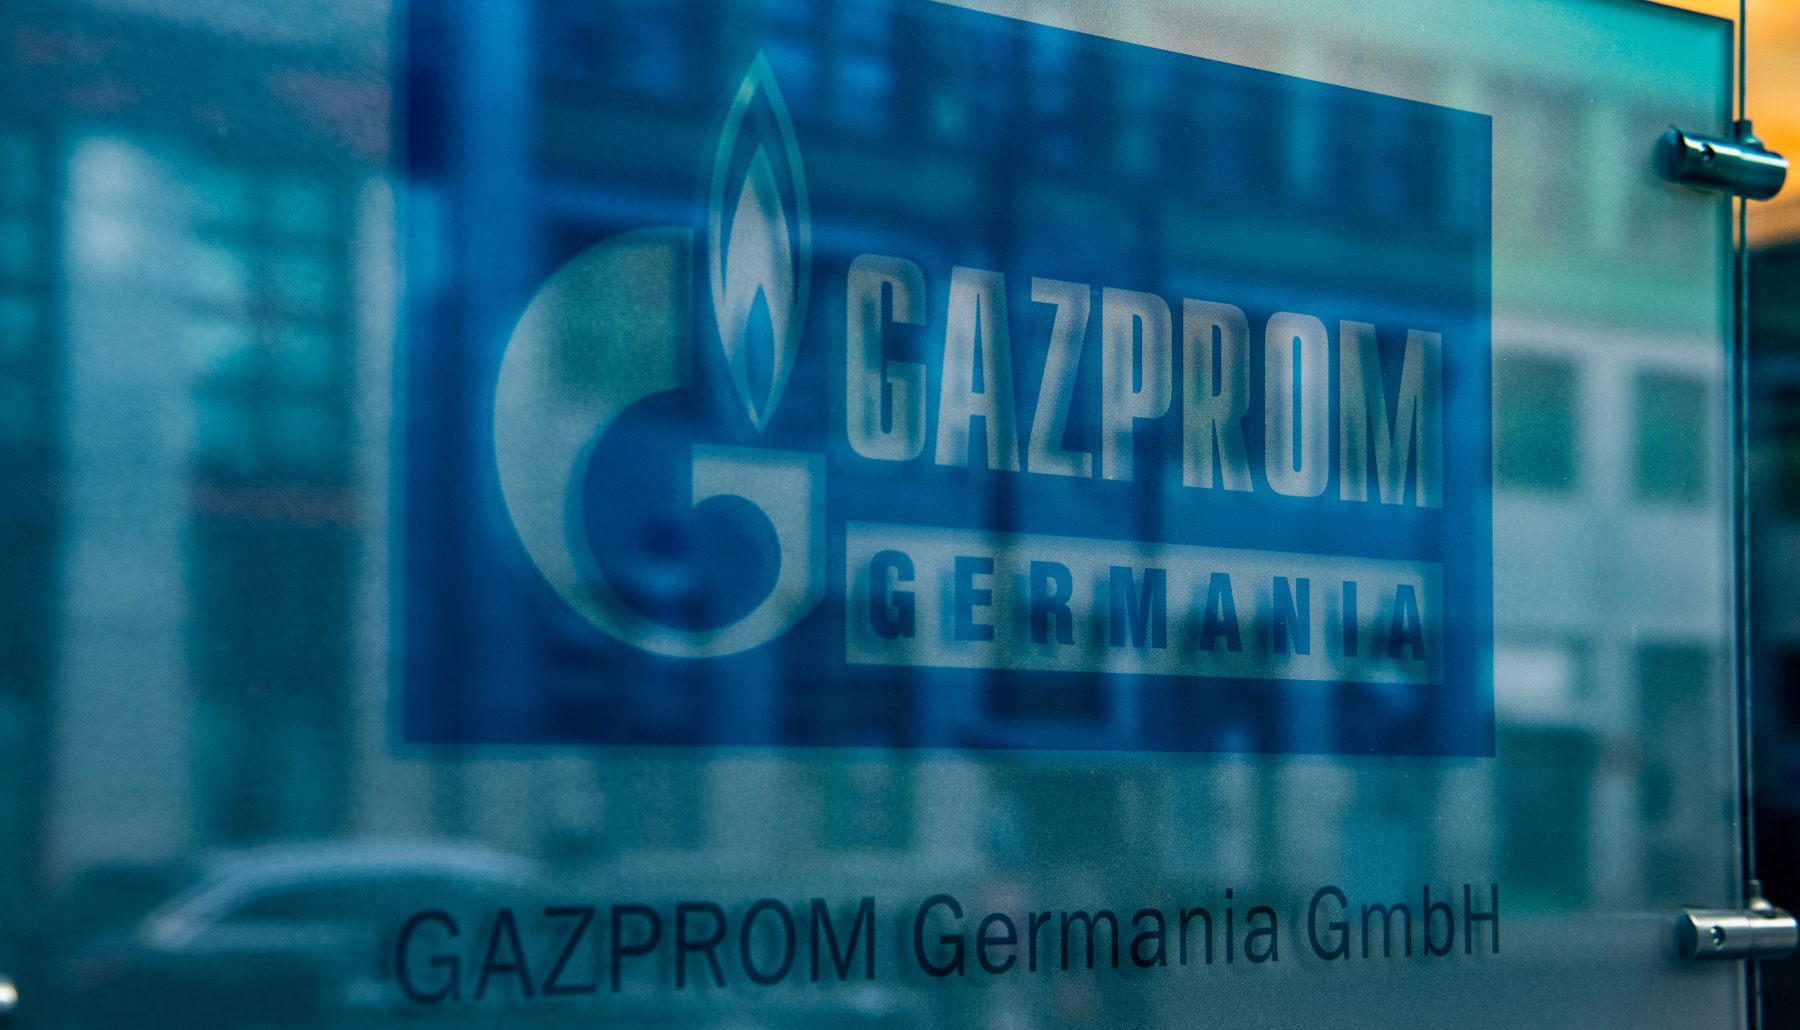 Gazprom Germania GmbH, filial de Gazprom Export del proveedor ruso de gas Gazprom. (Imagen: EP).